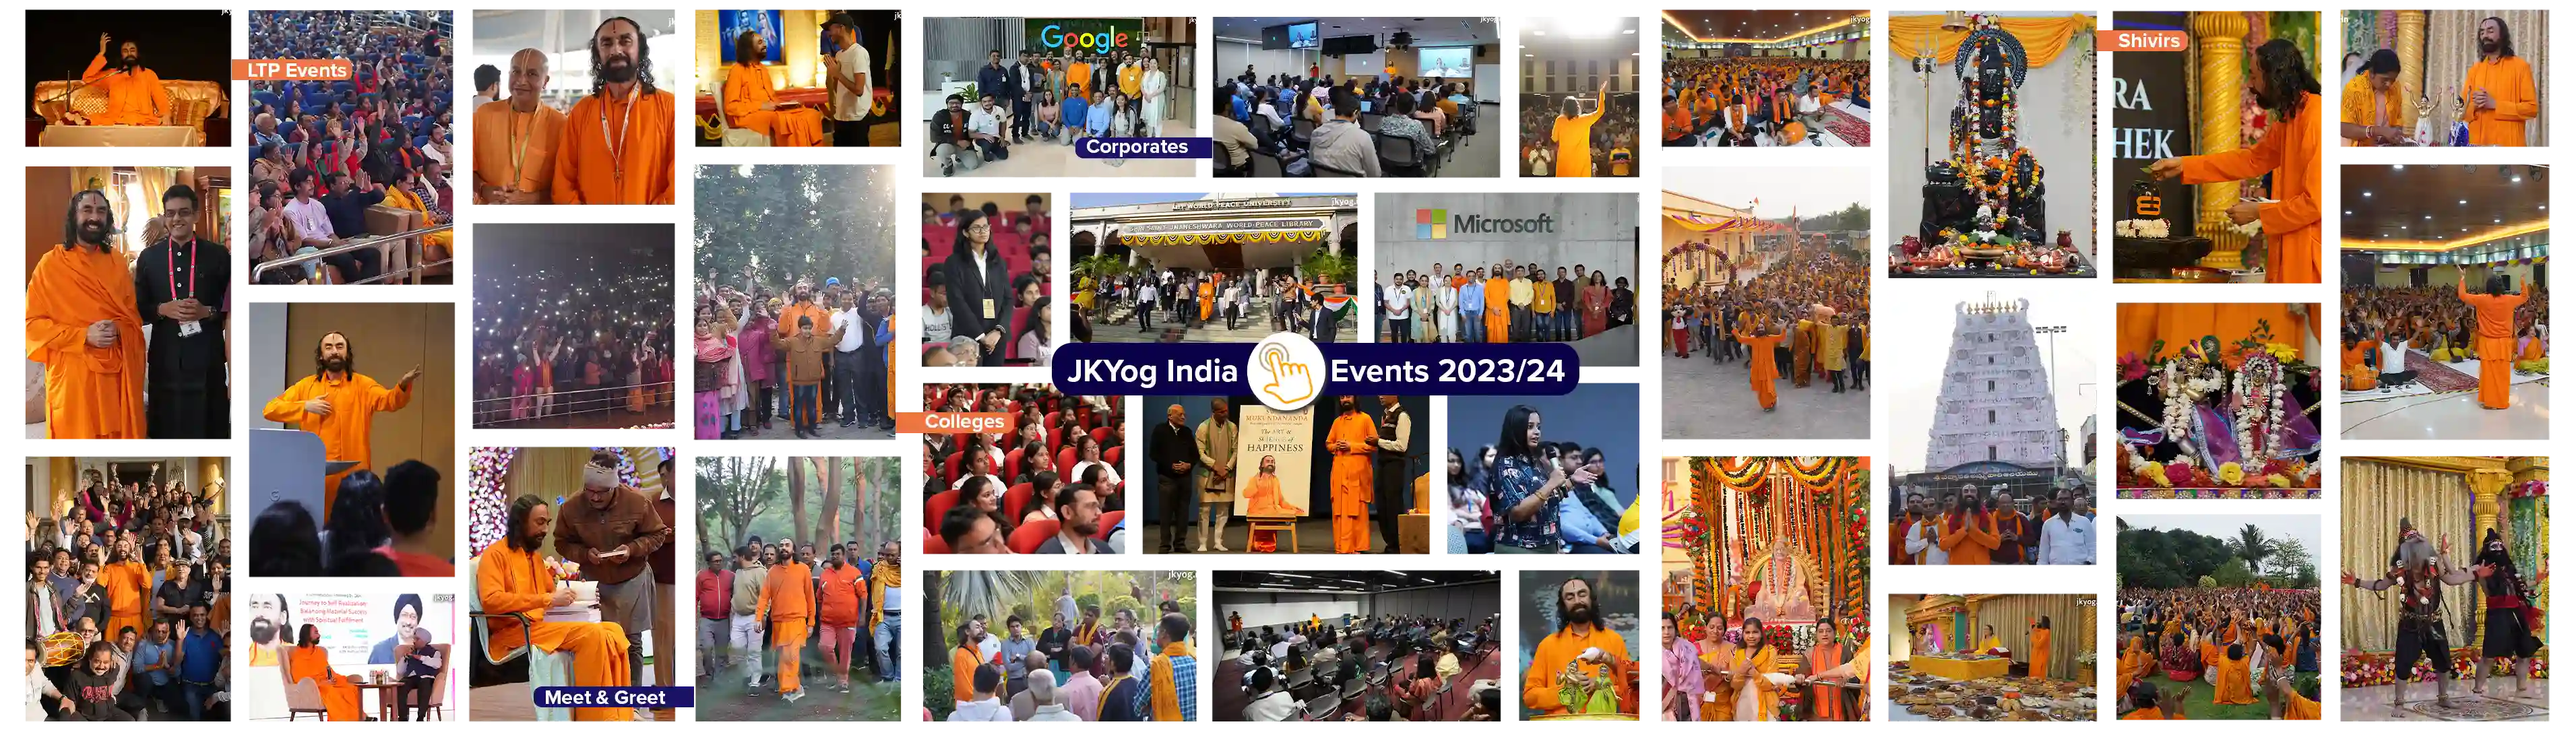 JKYog India Event Highlights